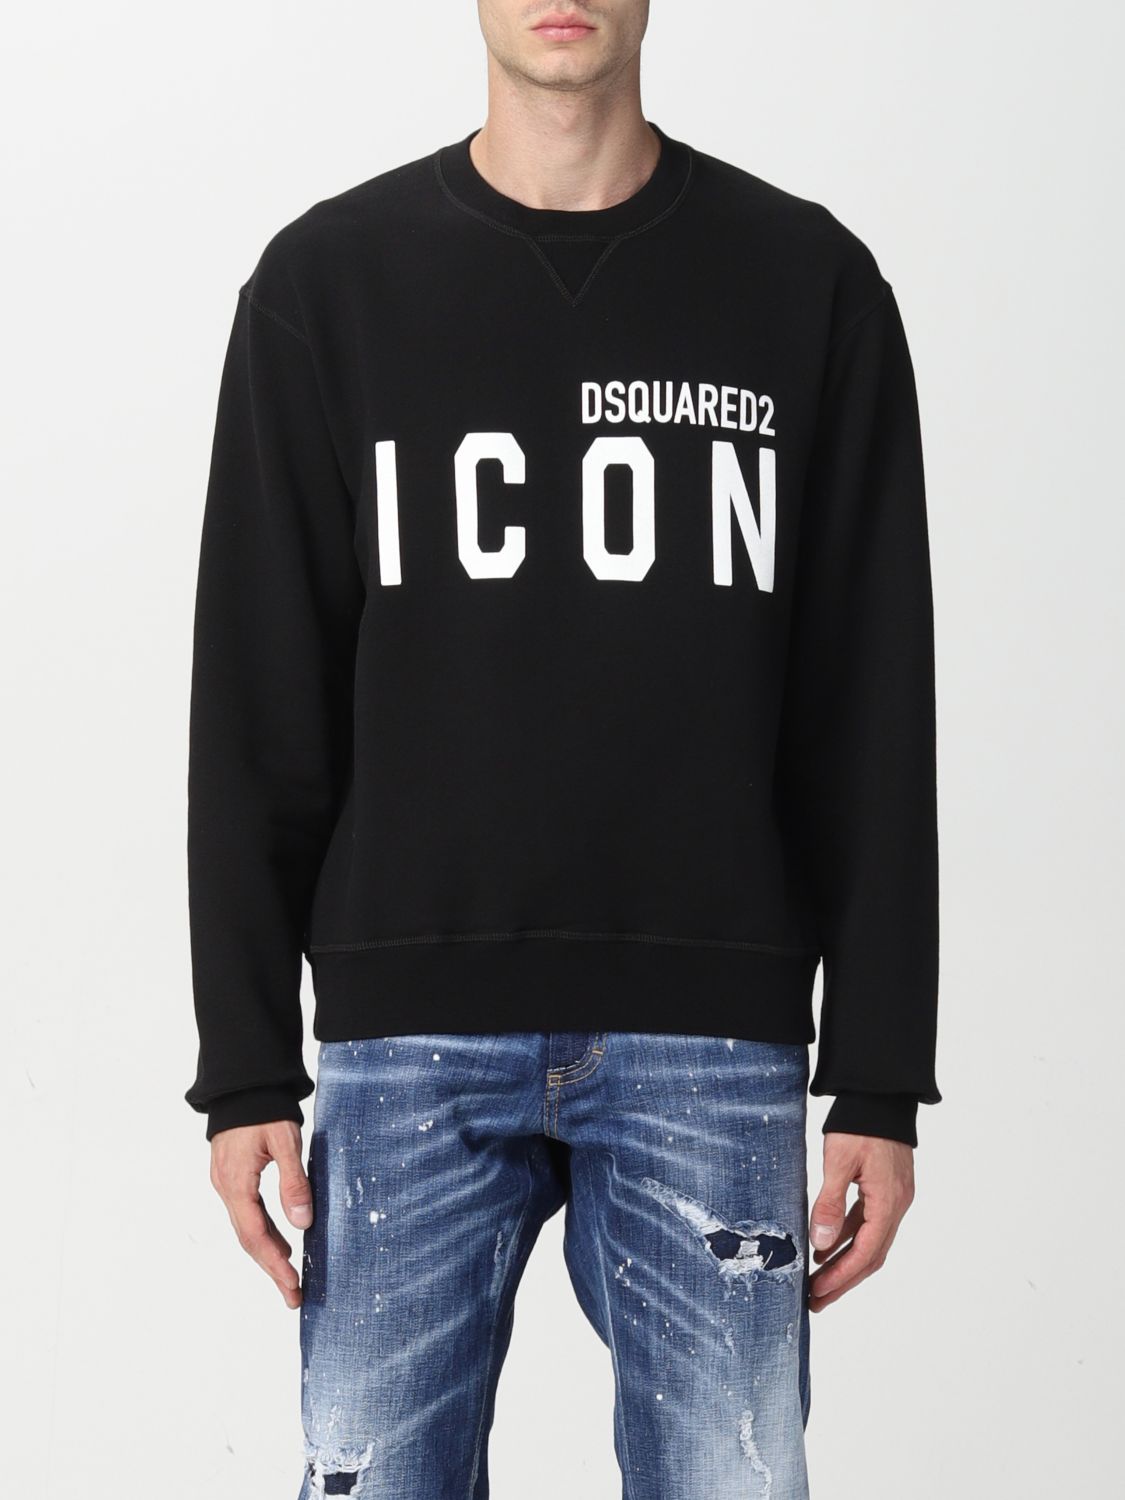 DSQUARED2: Icon cotton sweatshirt - Black | Dsquared2 sweatshirt